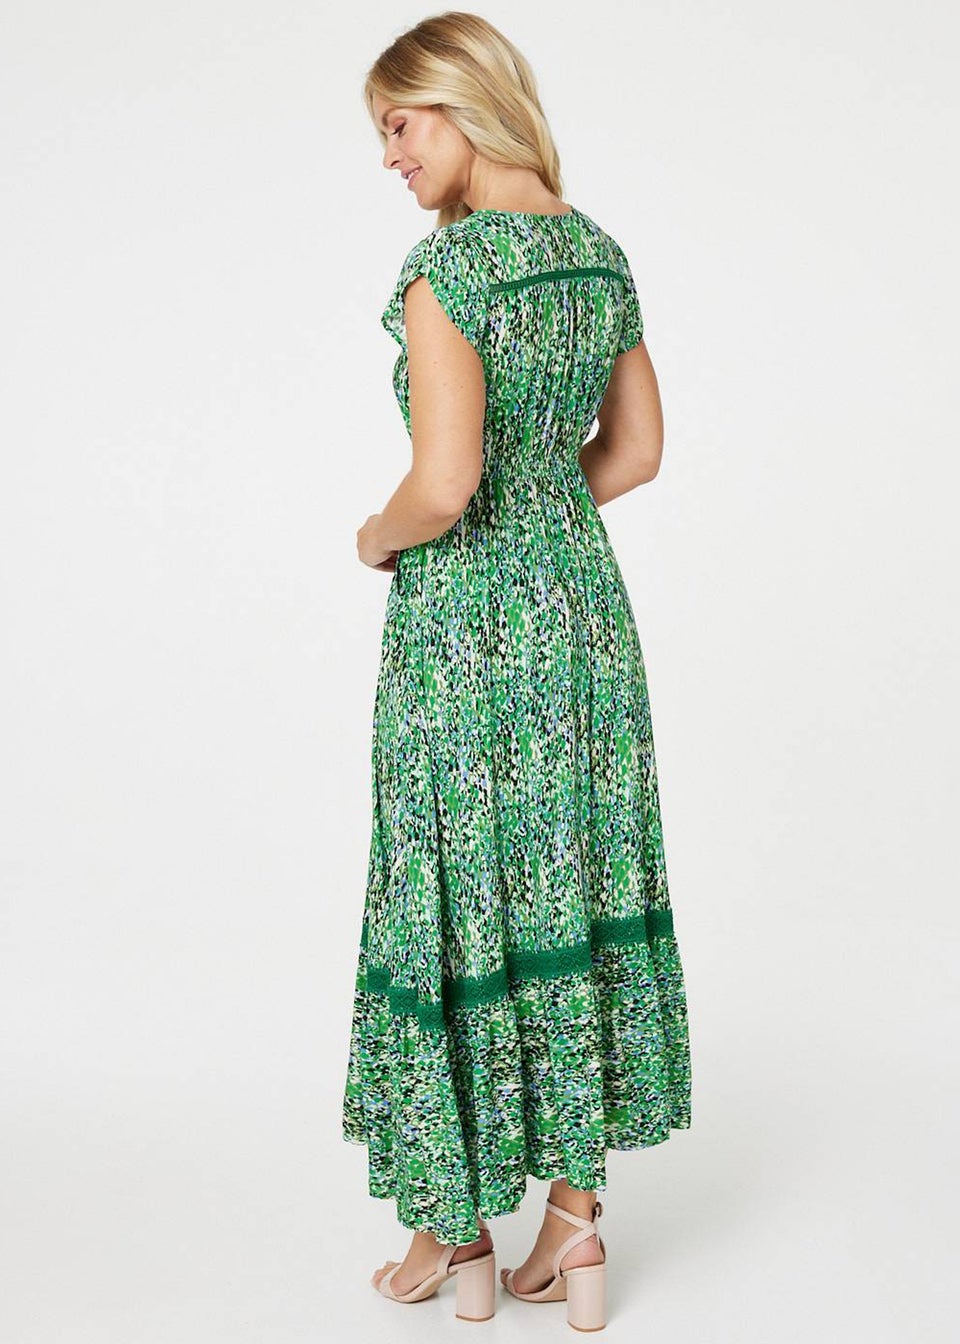 Izabel London Green Printed Lace Detail Maxi Dress